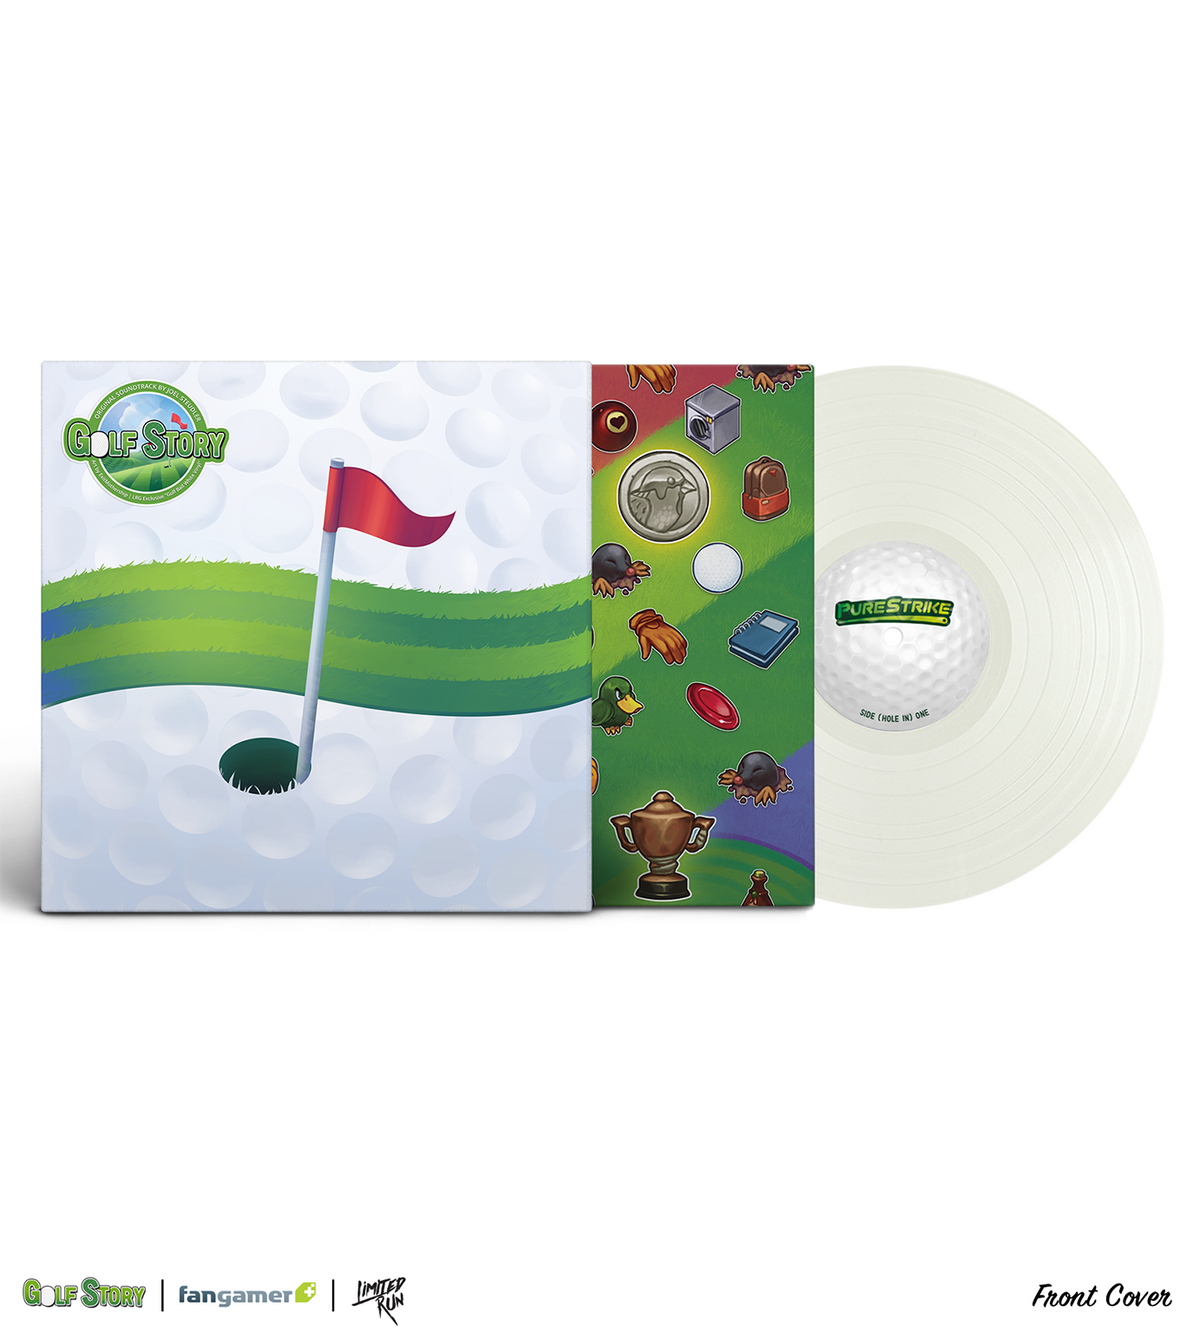 Golf Story Soundtrack Vinyl Exclusive Variant